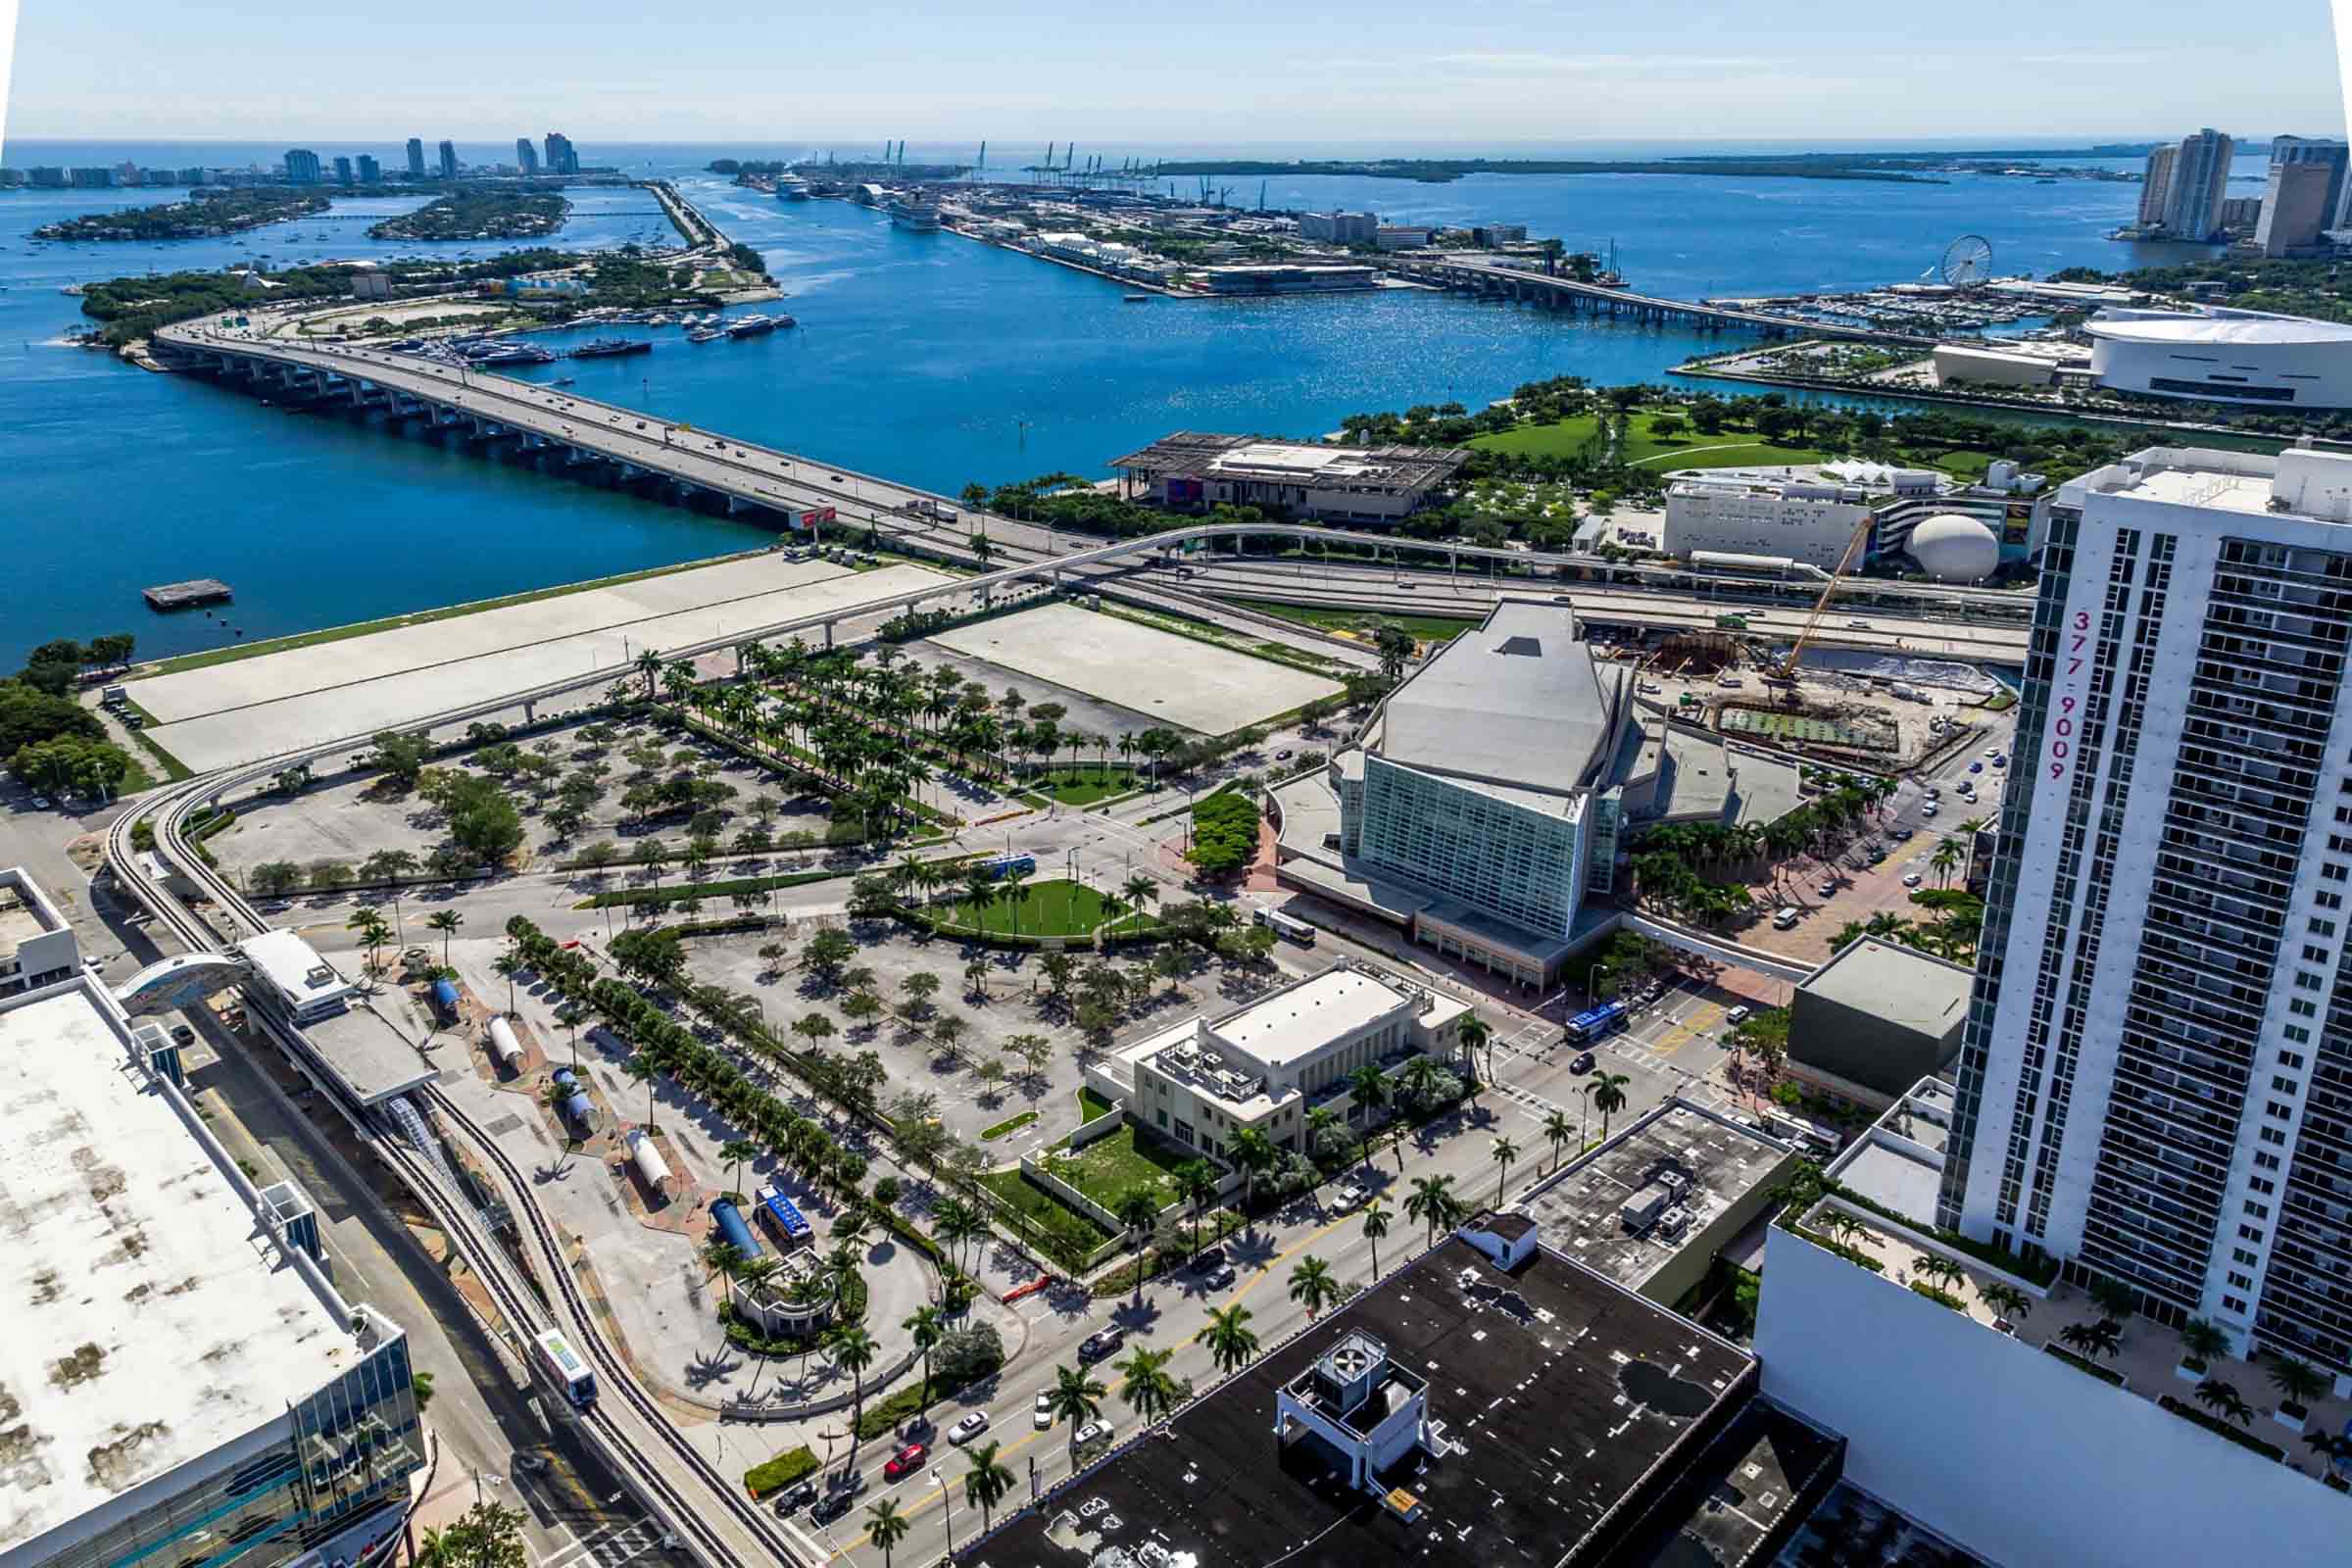 Downtown Miami Waterfront Development Site Set To Bring Over $1 Billion